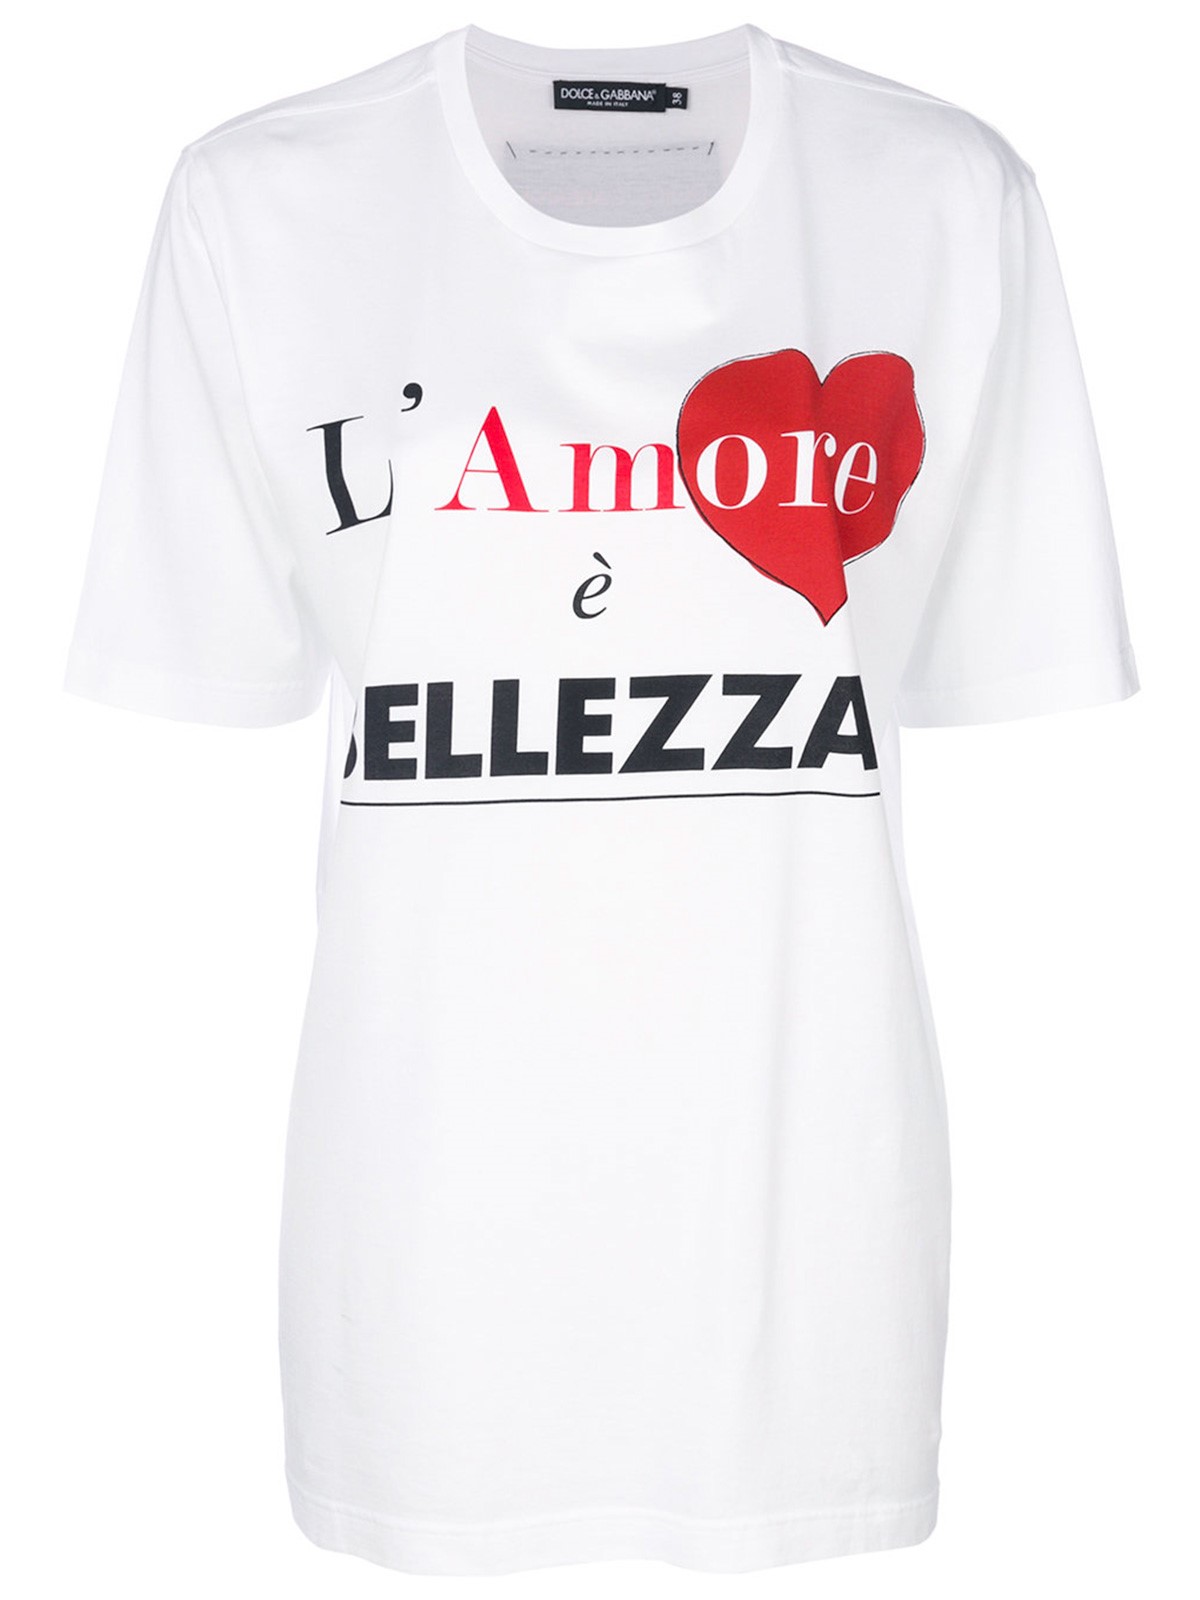 Dolce Gabbana L Amore E Bellezza T Shirt Available On Montiboutique Com